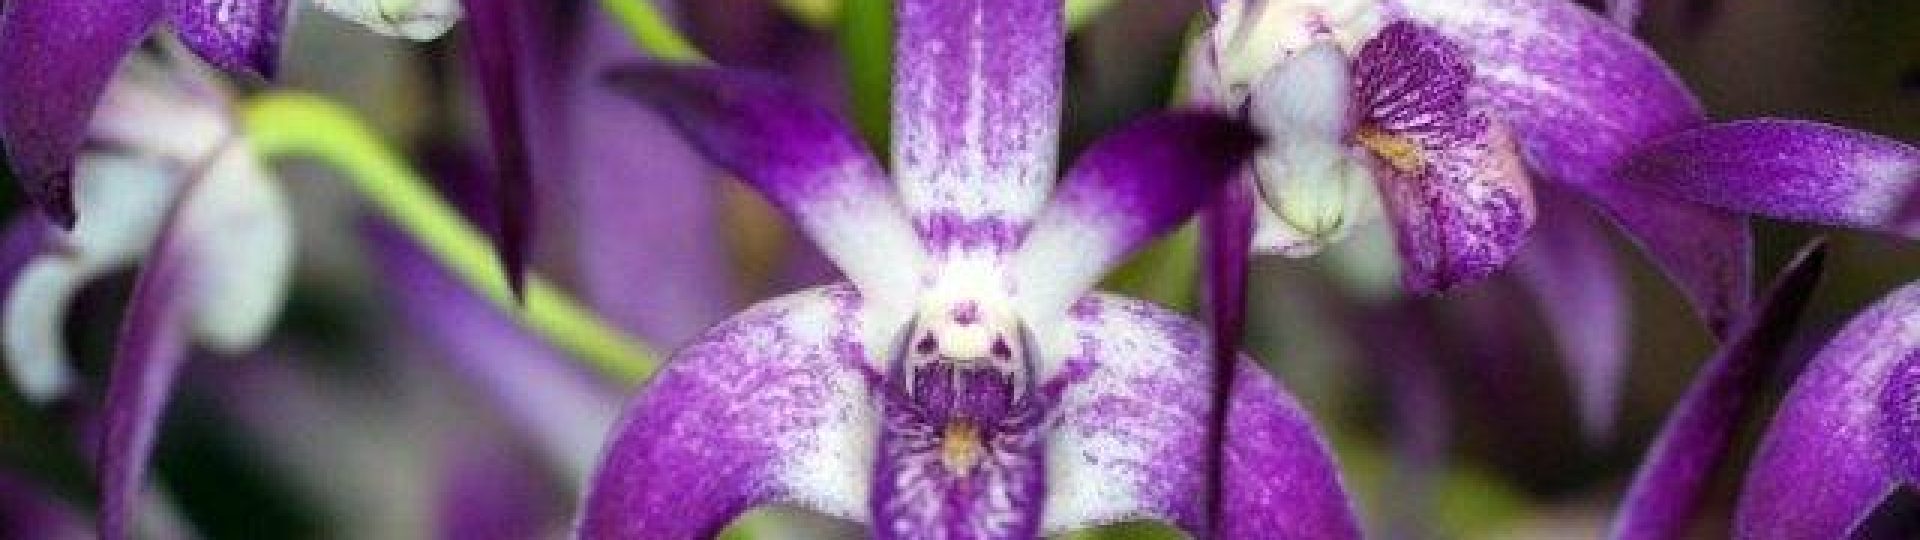 australian native orchid dendrobium